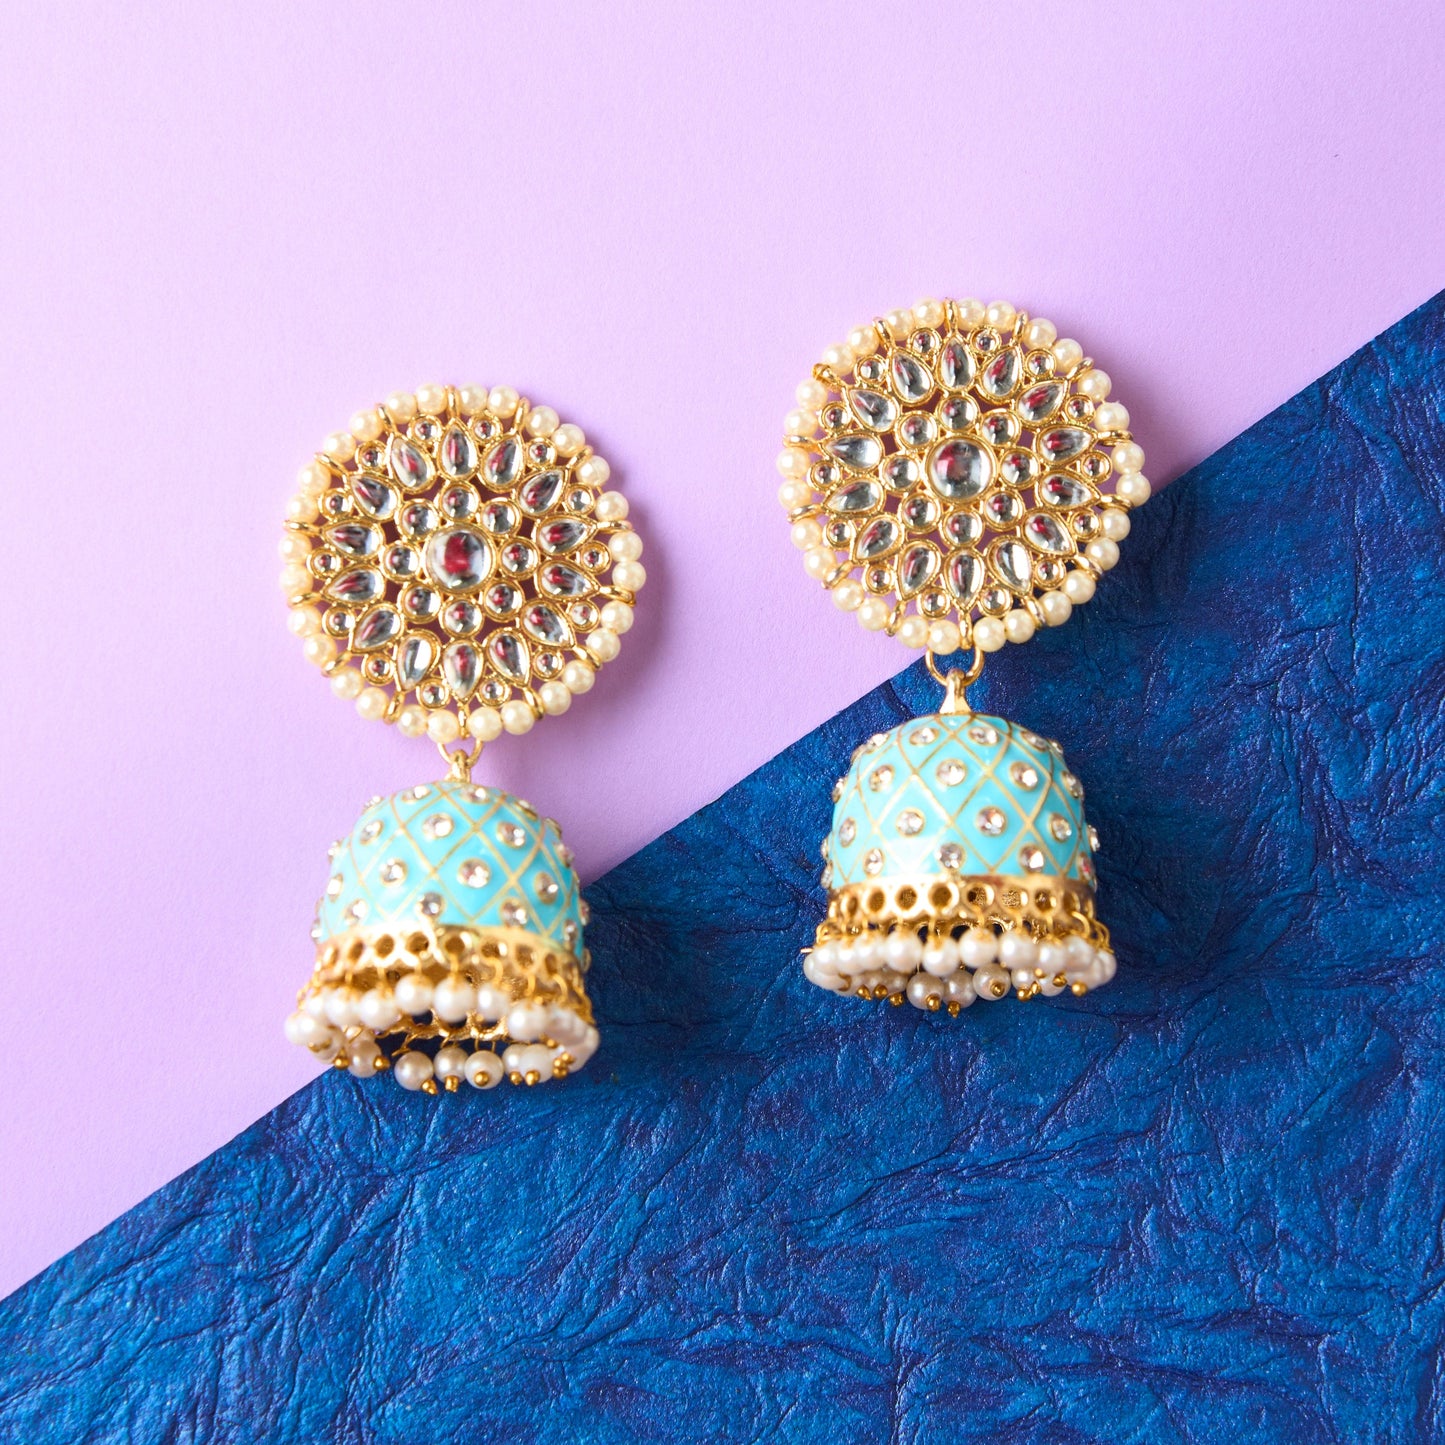 Moonstruck Traditional Inidian Golden Meenakari Jhumka/Jhumki Earrings With Pearls for Women (Blue) - www.MoonstruckINC.com